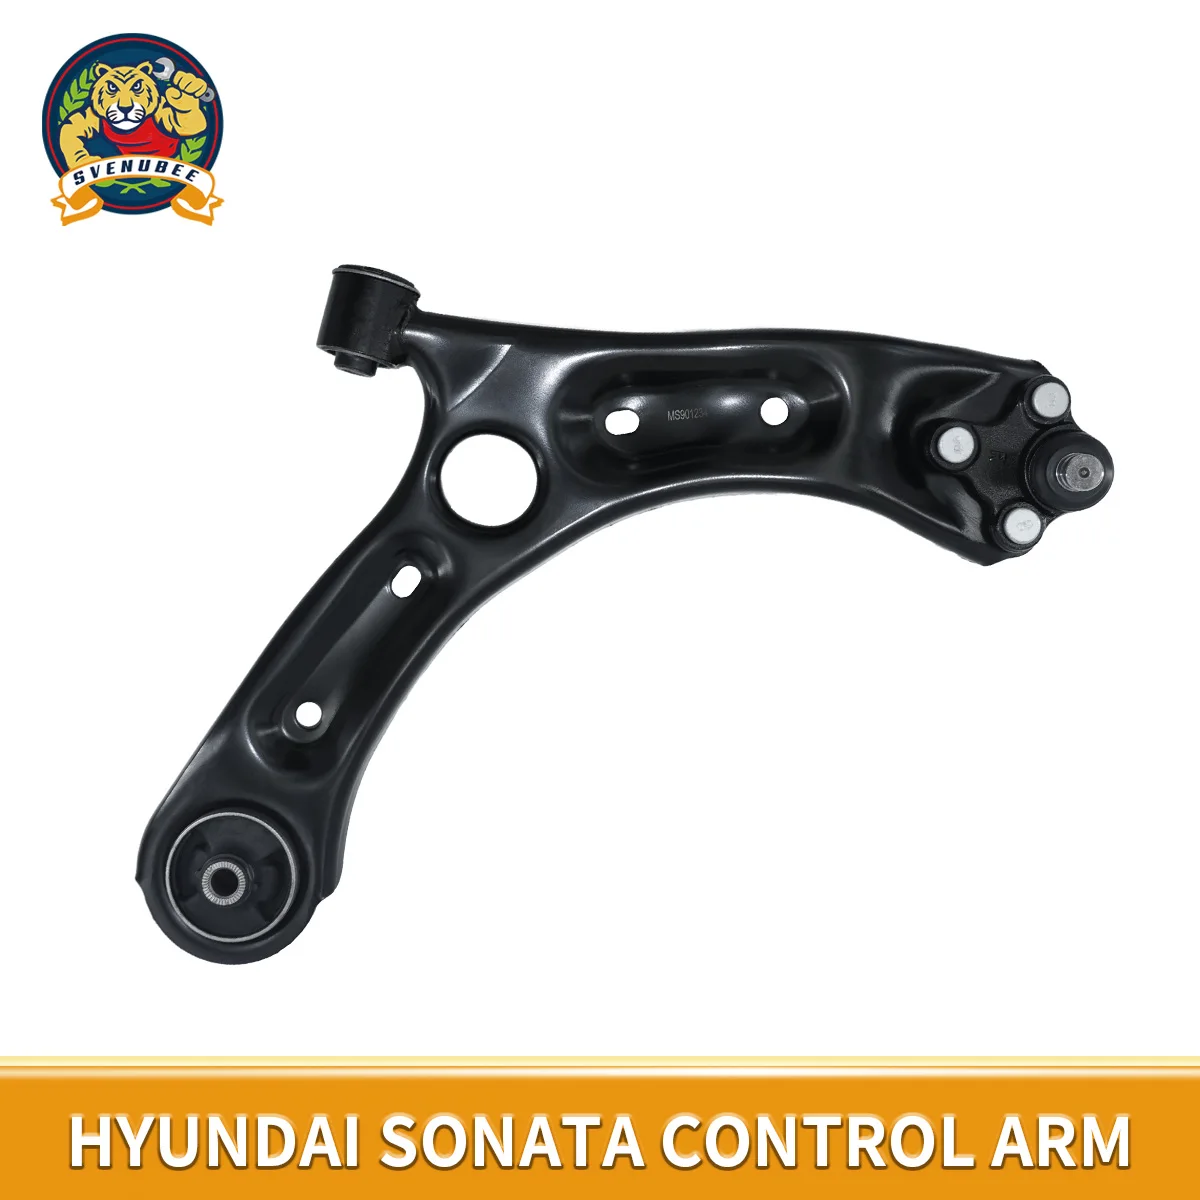 

Svenubee Front Lower Control Arm with Ball Joints for Hyundai Sonata Tucson Kia Optima Sportage 2015 2016 2017 2018 2019